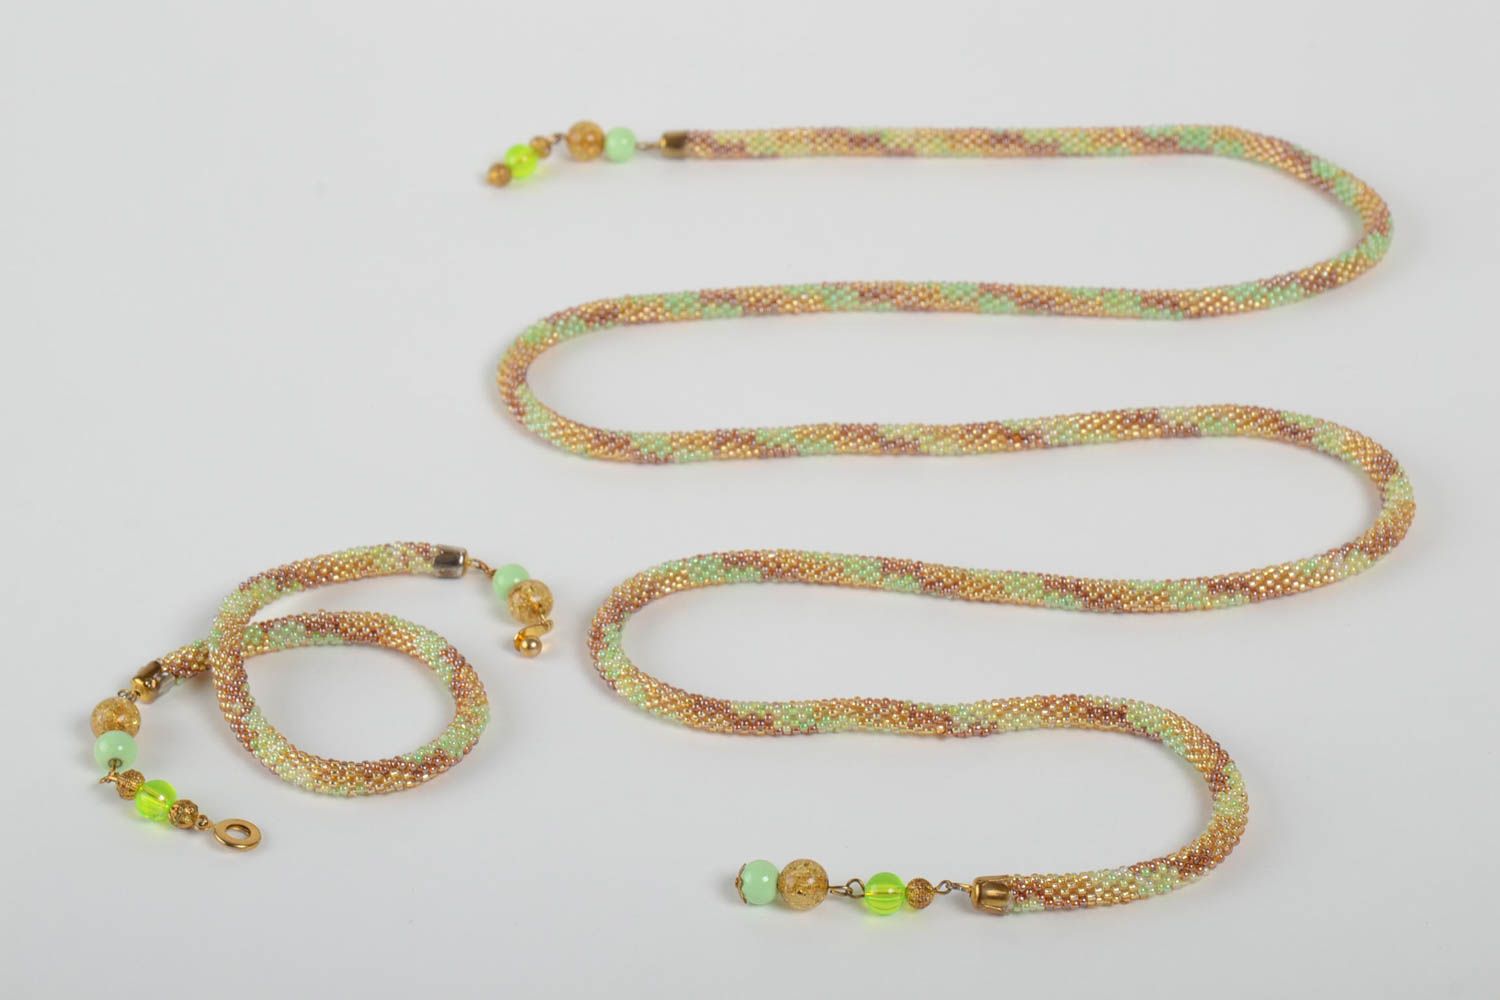 Gentle handmade beaded cord necklace and bracelet designer jewelry for women photo 4